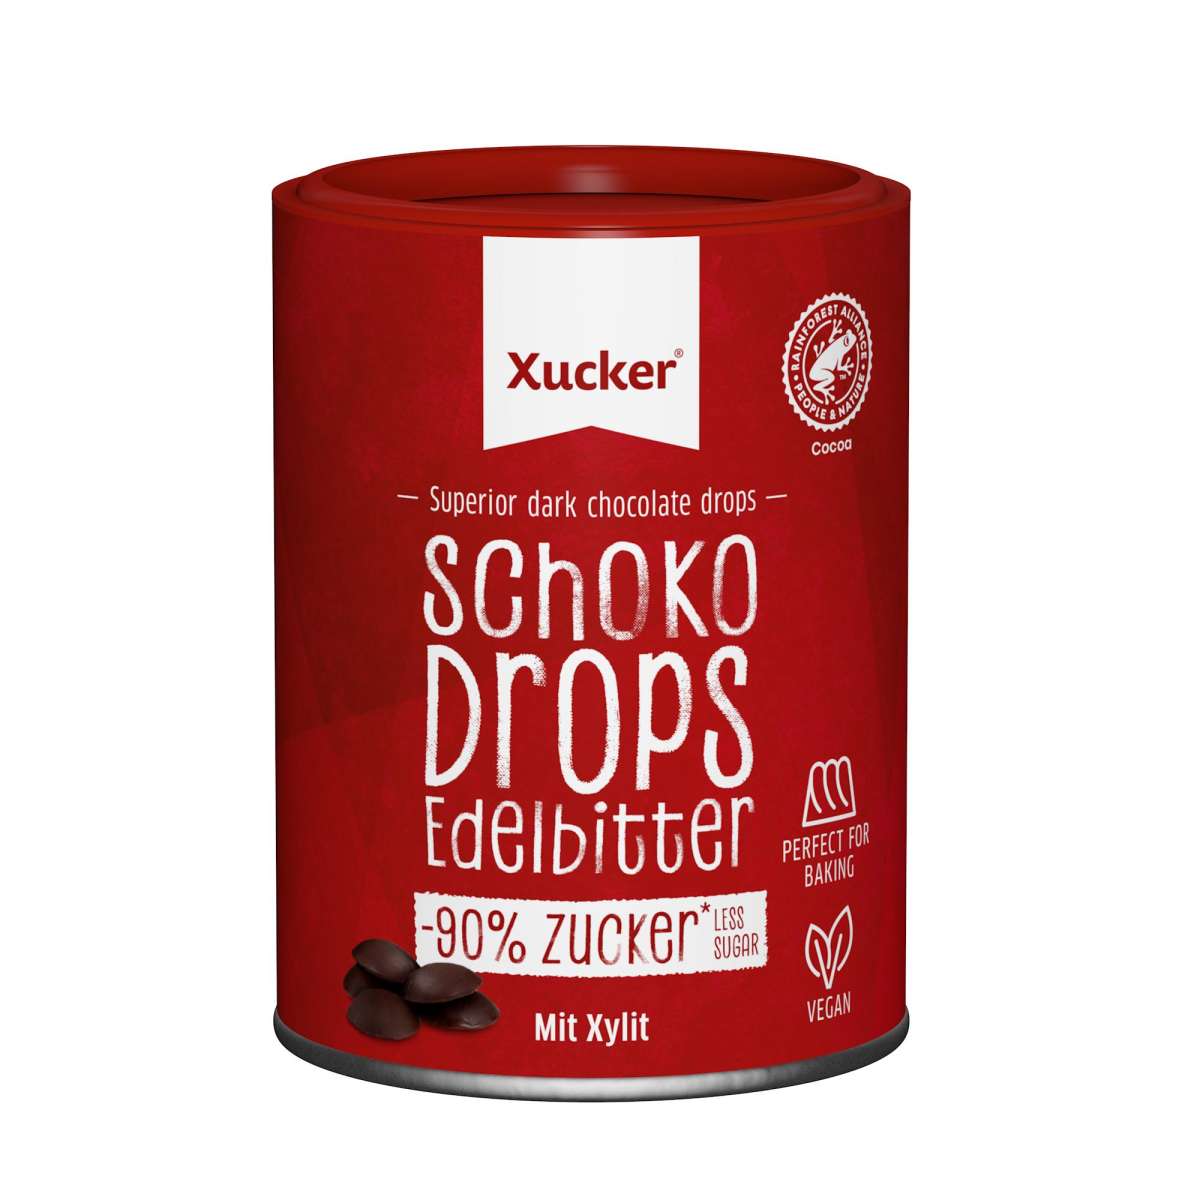 Xucker Vegane Schoko-Drops Edelbitter mit Xylit - 200g